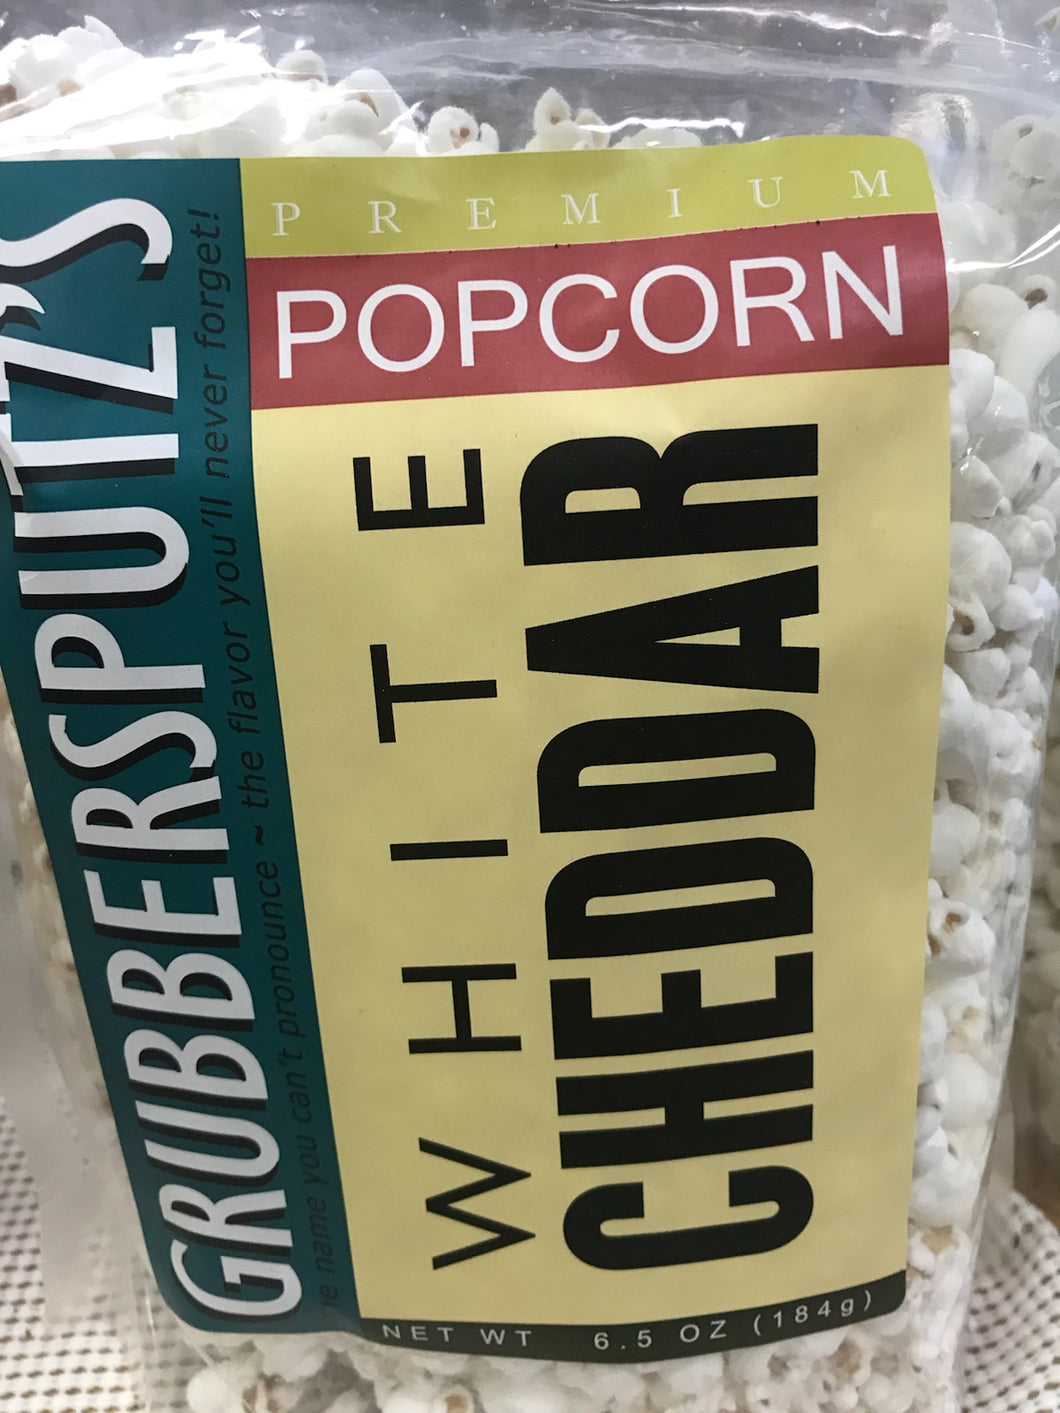 Grubbersputz's White Cheddar Popcorn